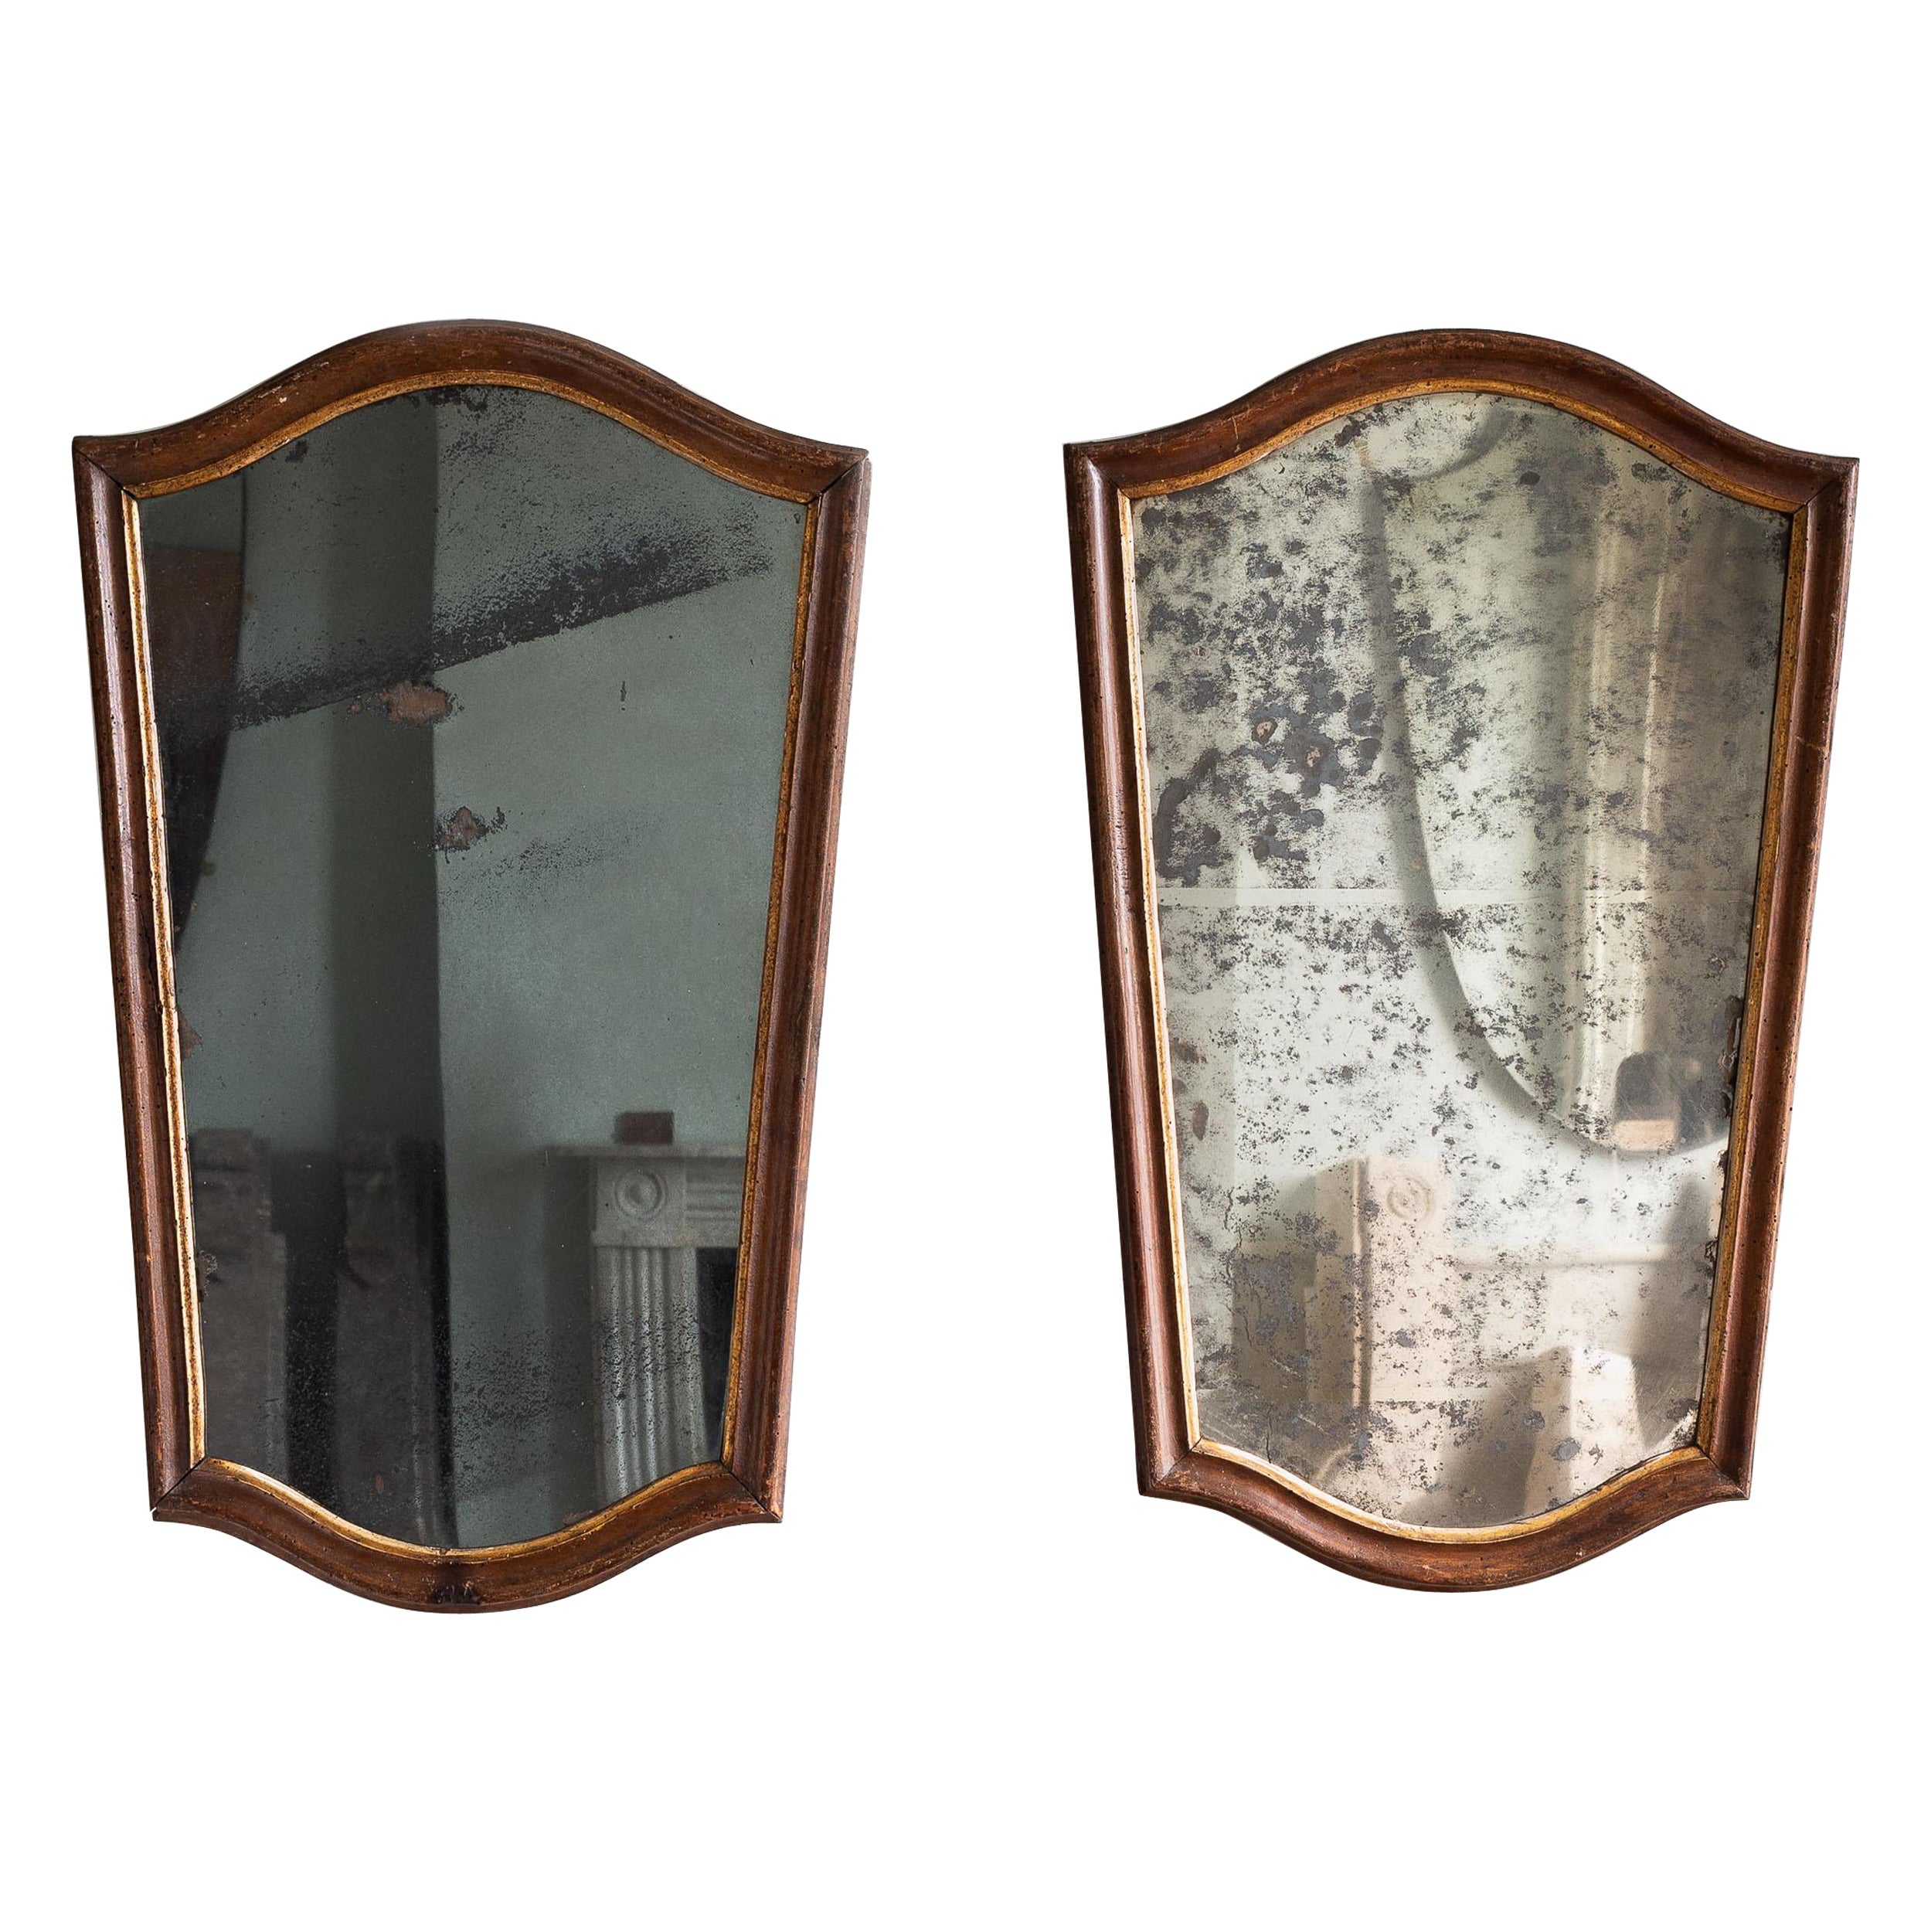 Pair of 18th Century Italian Mirrors